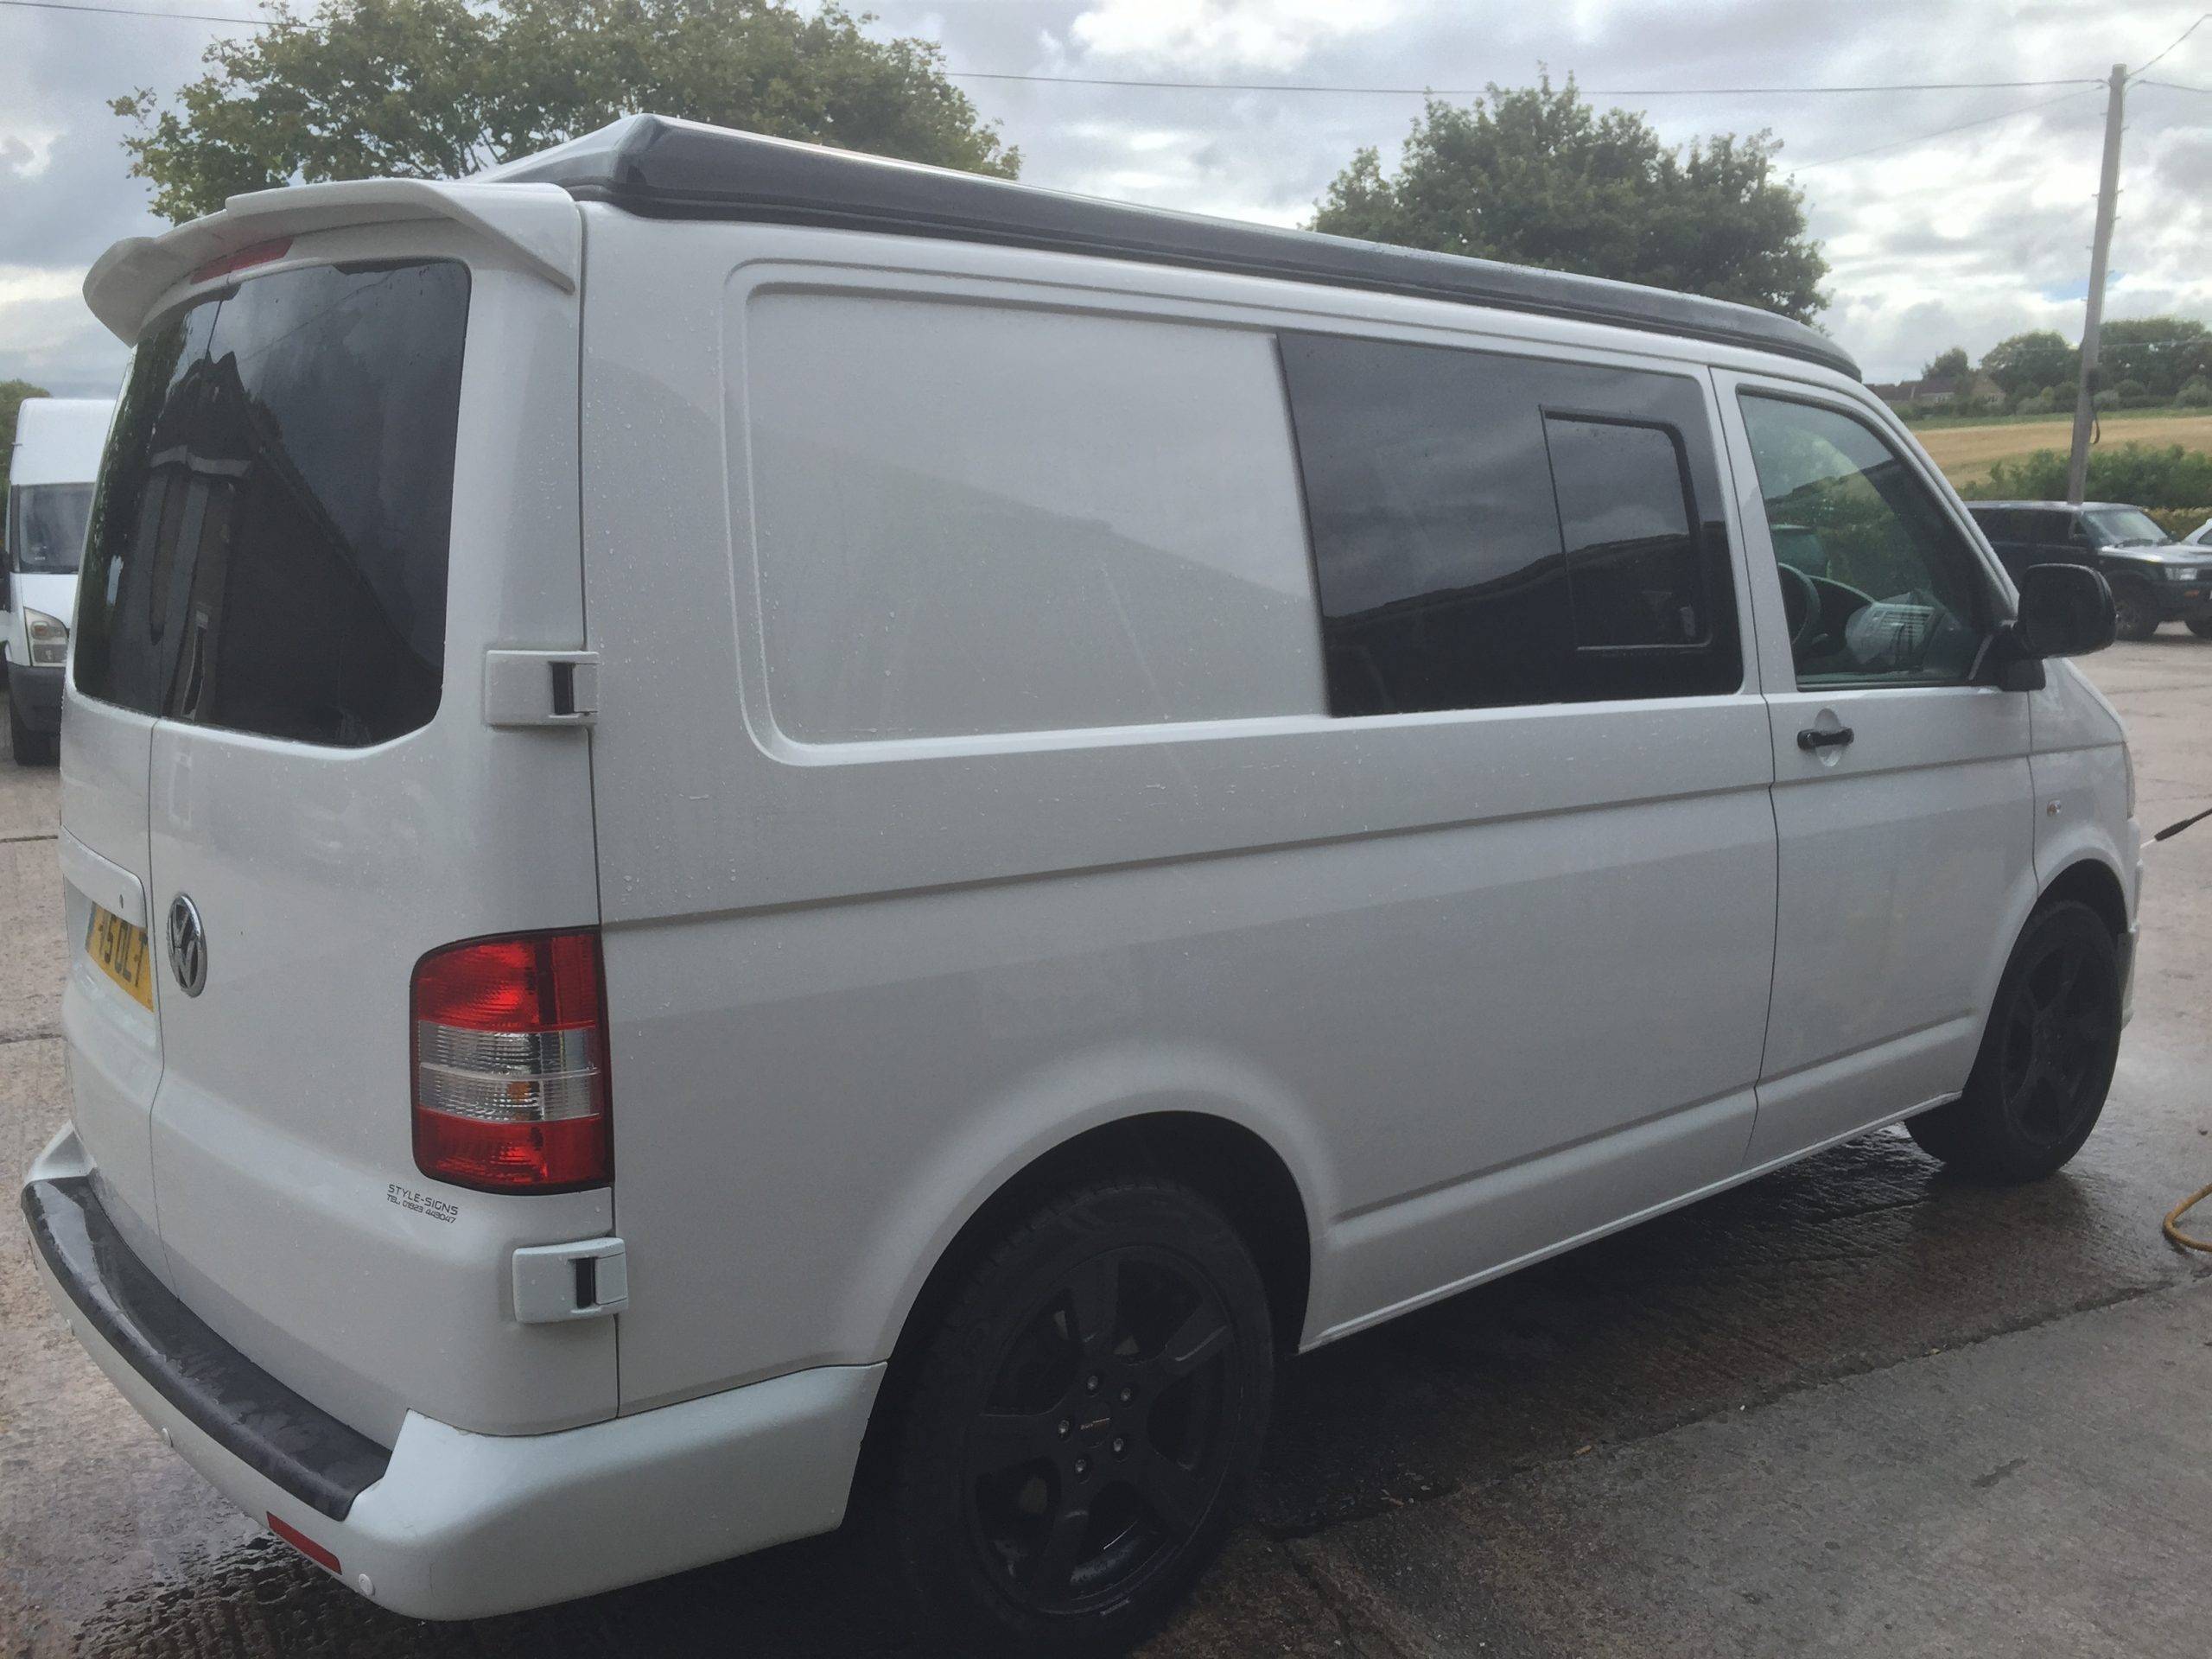 white vw van with black detailing